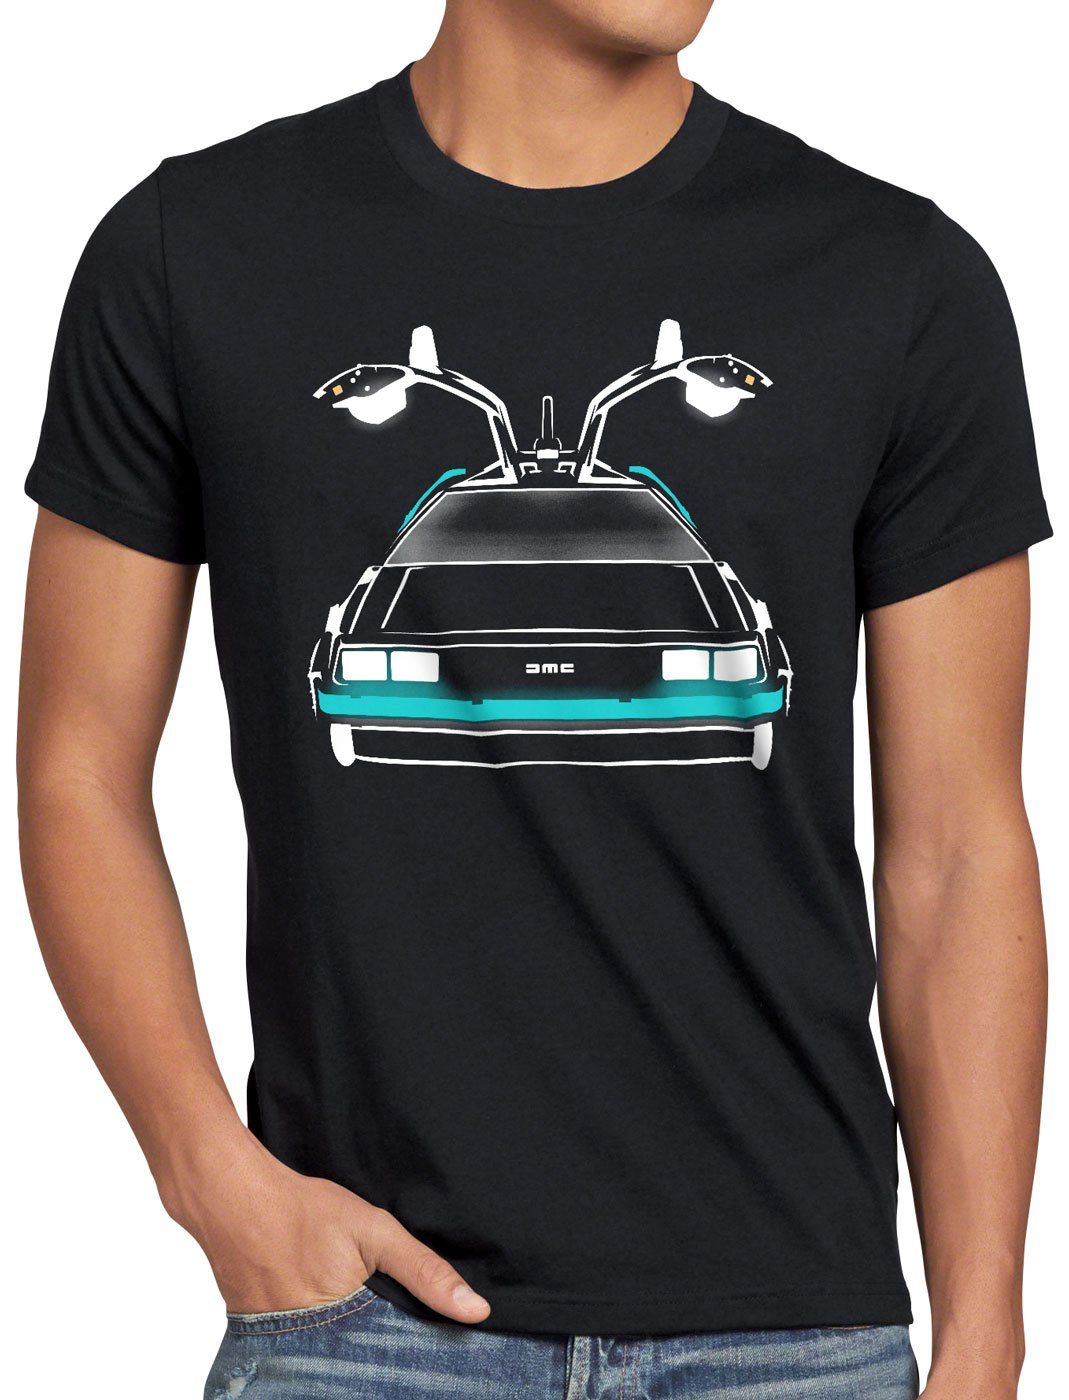 T-Shirt Delorean of auto style3 zeitreise mcfly Speed Light dmc-12 Herren Print-Shirt